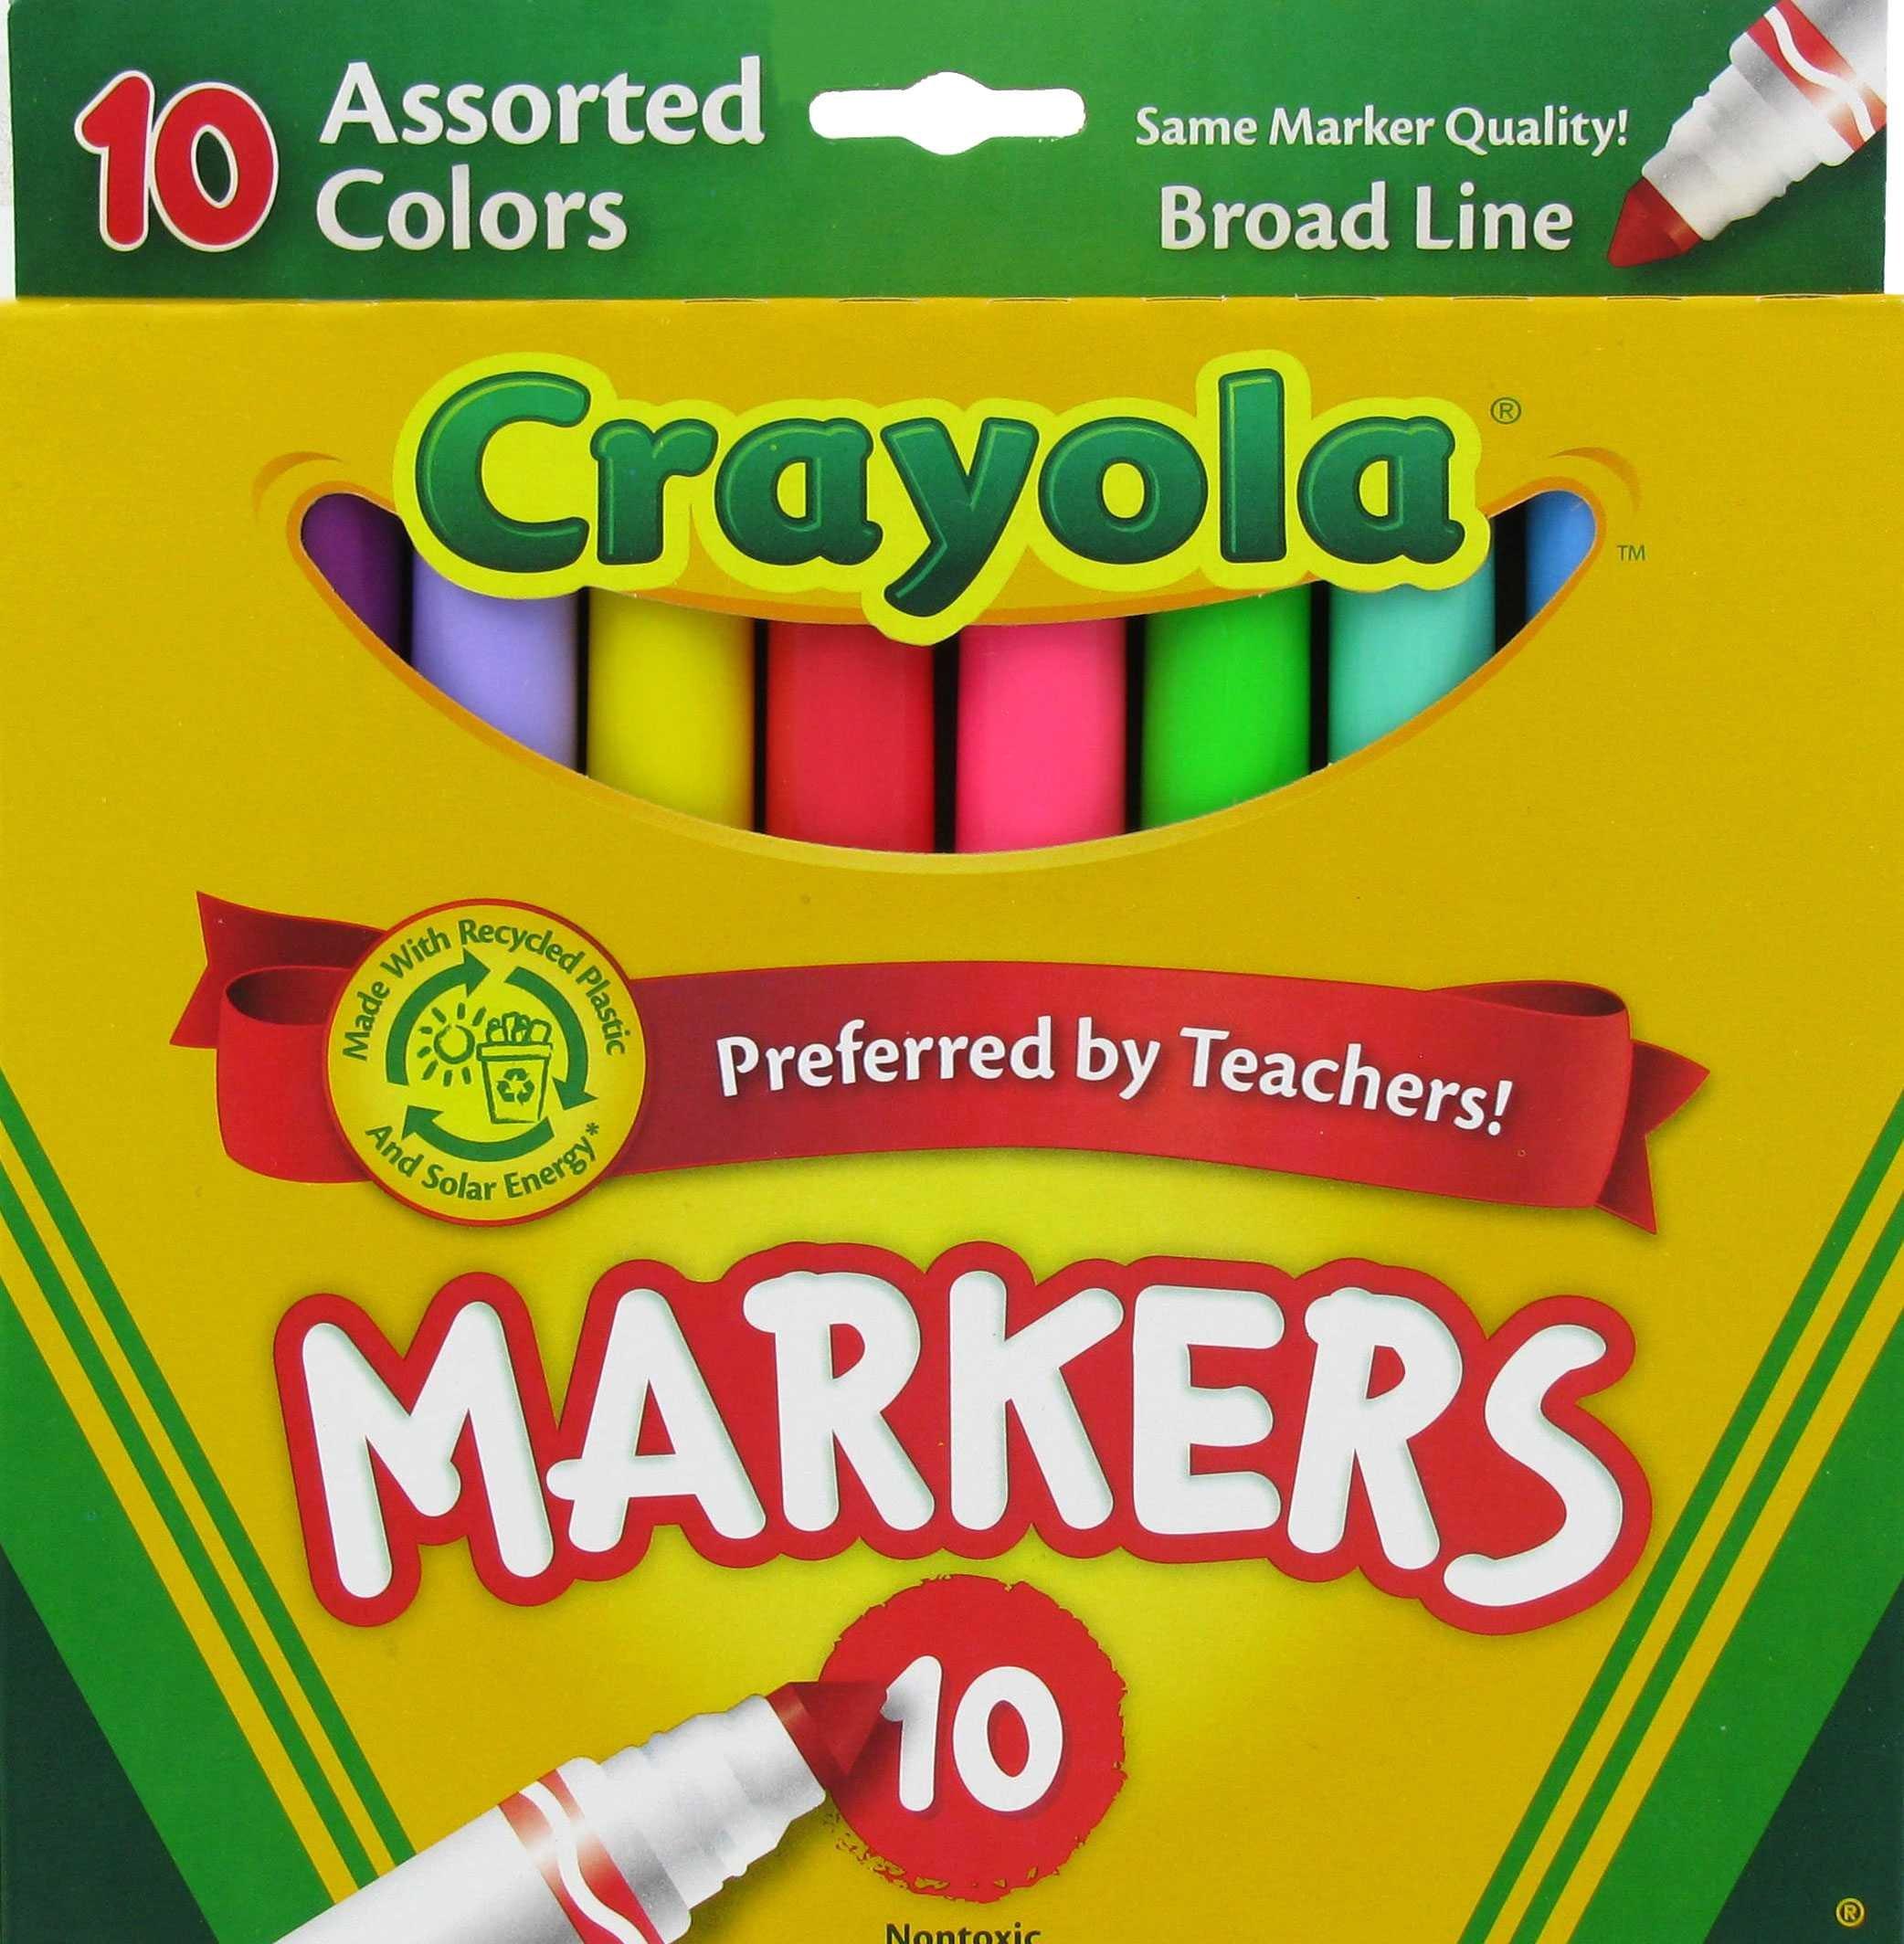  Crayola 10 Count Markers